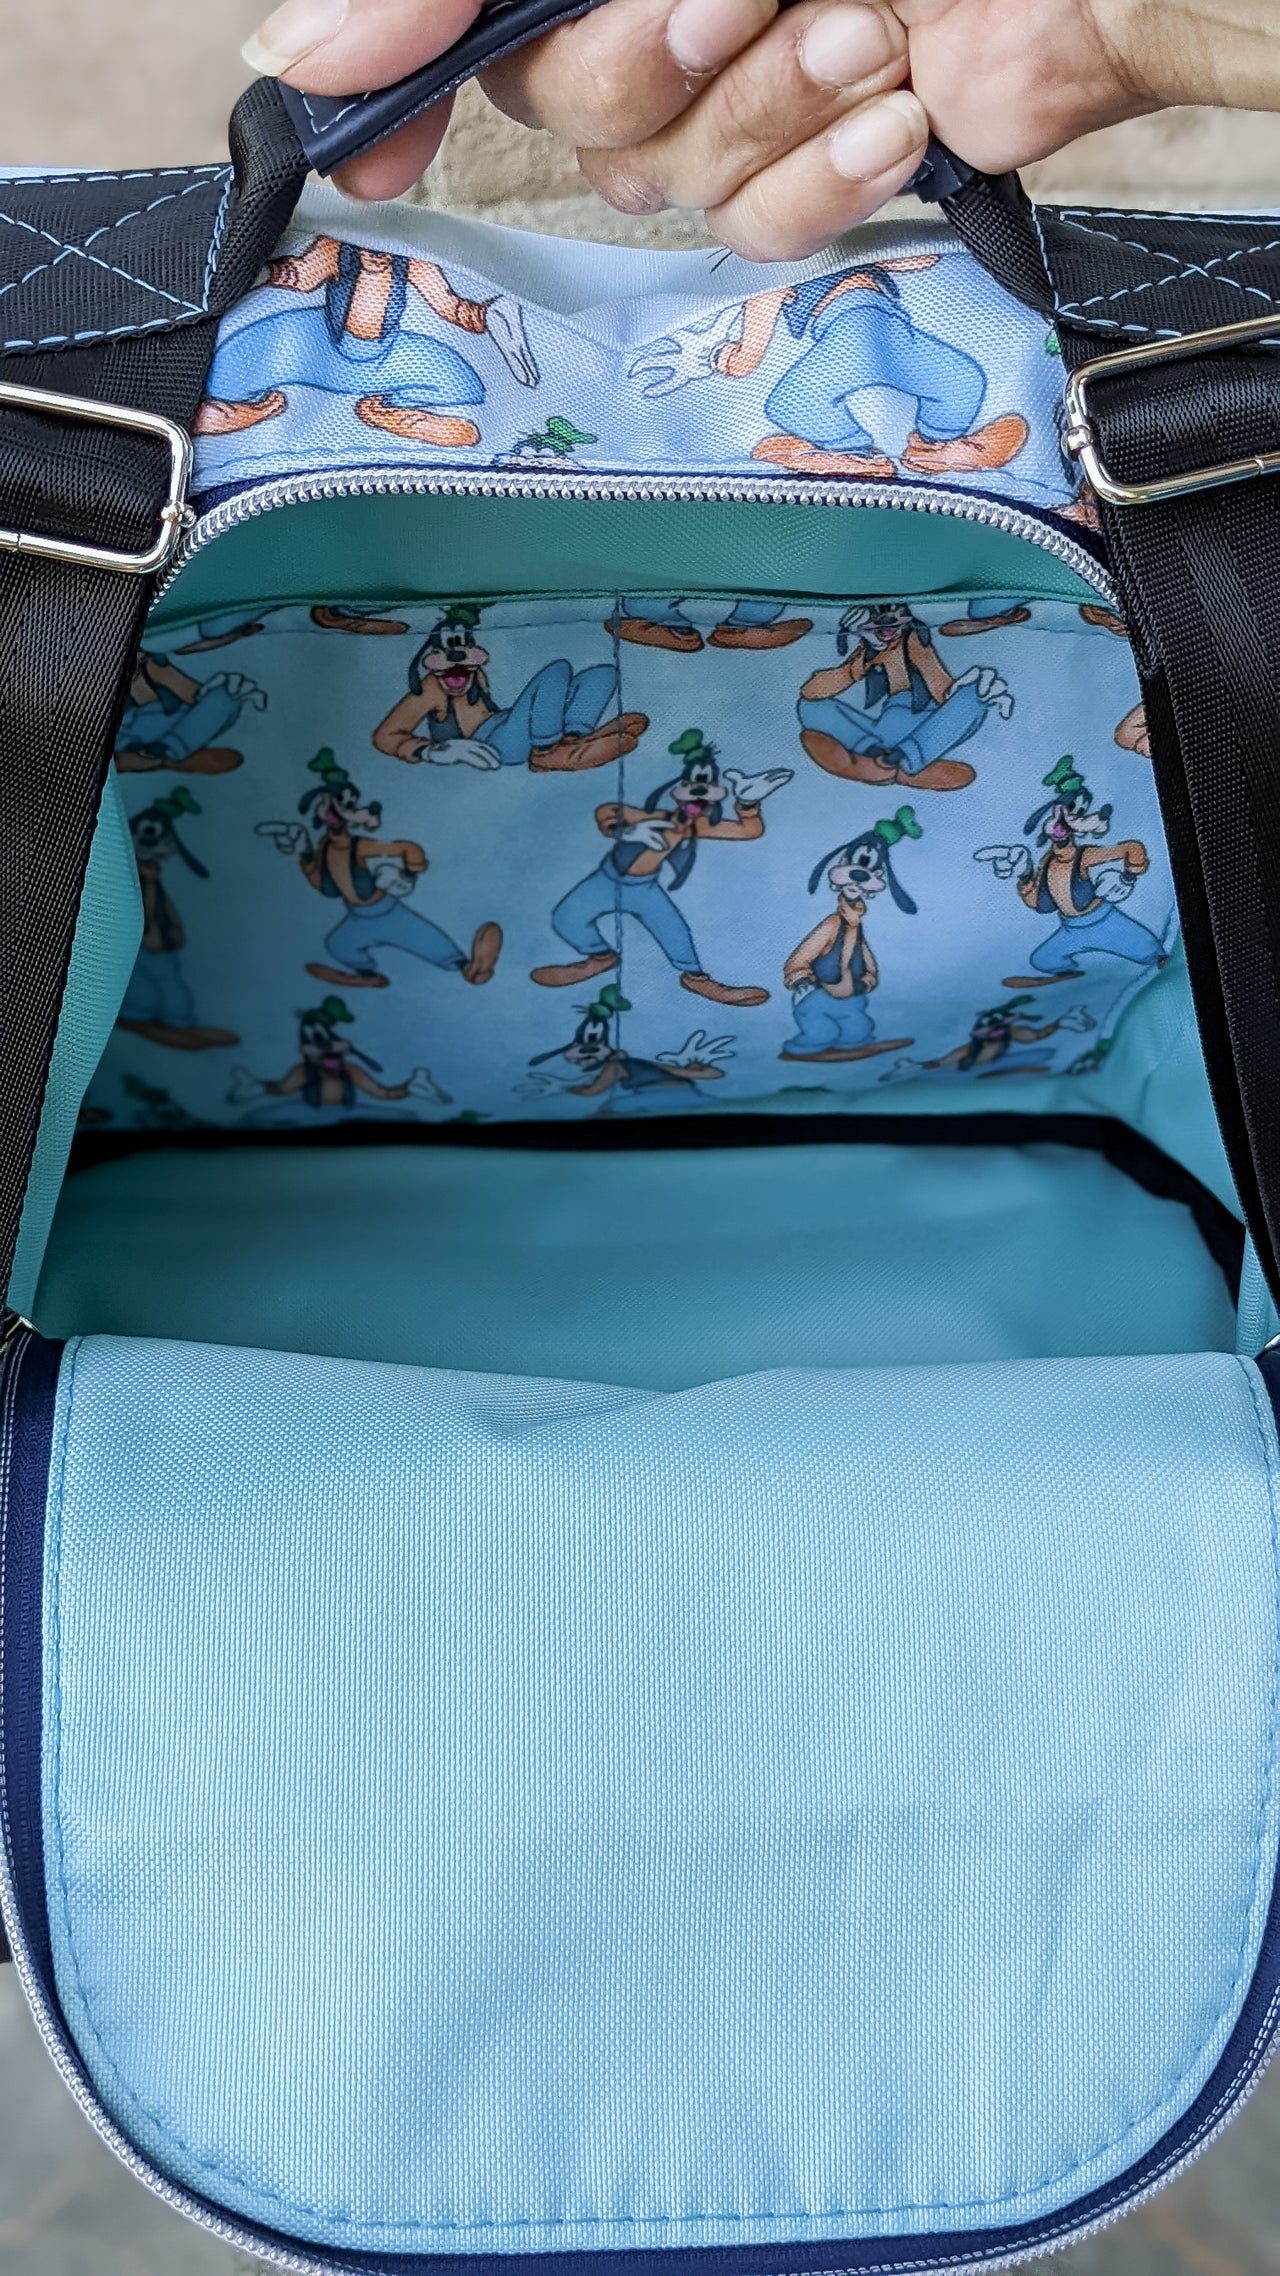 Goofy Convertible Backpack